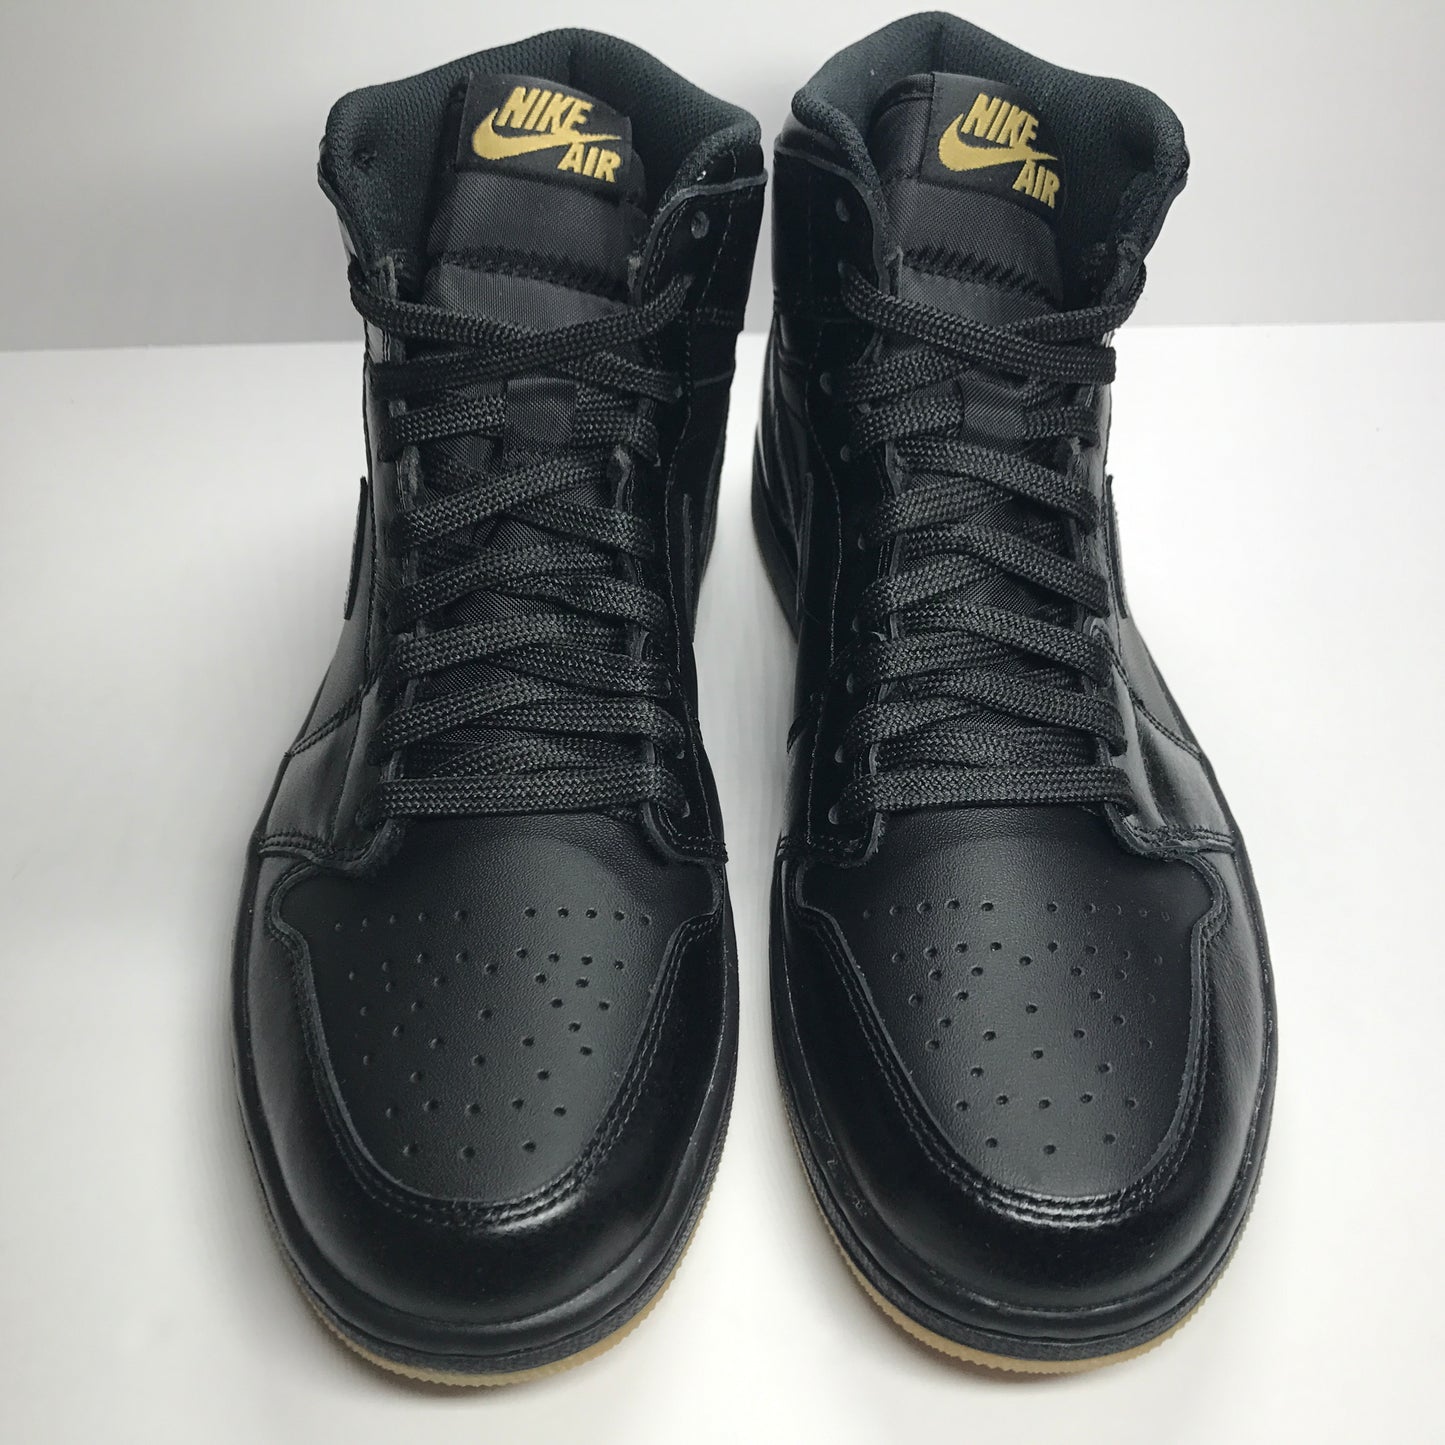 DS Nike Air Jordan 1 I Retro High Black Gum Taille 8.5/Taille 13